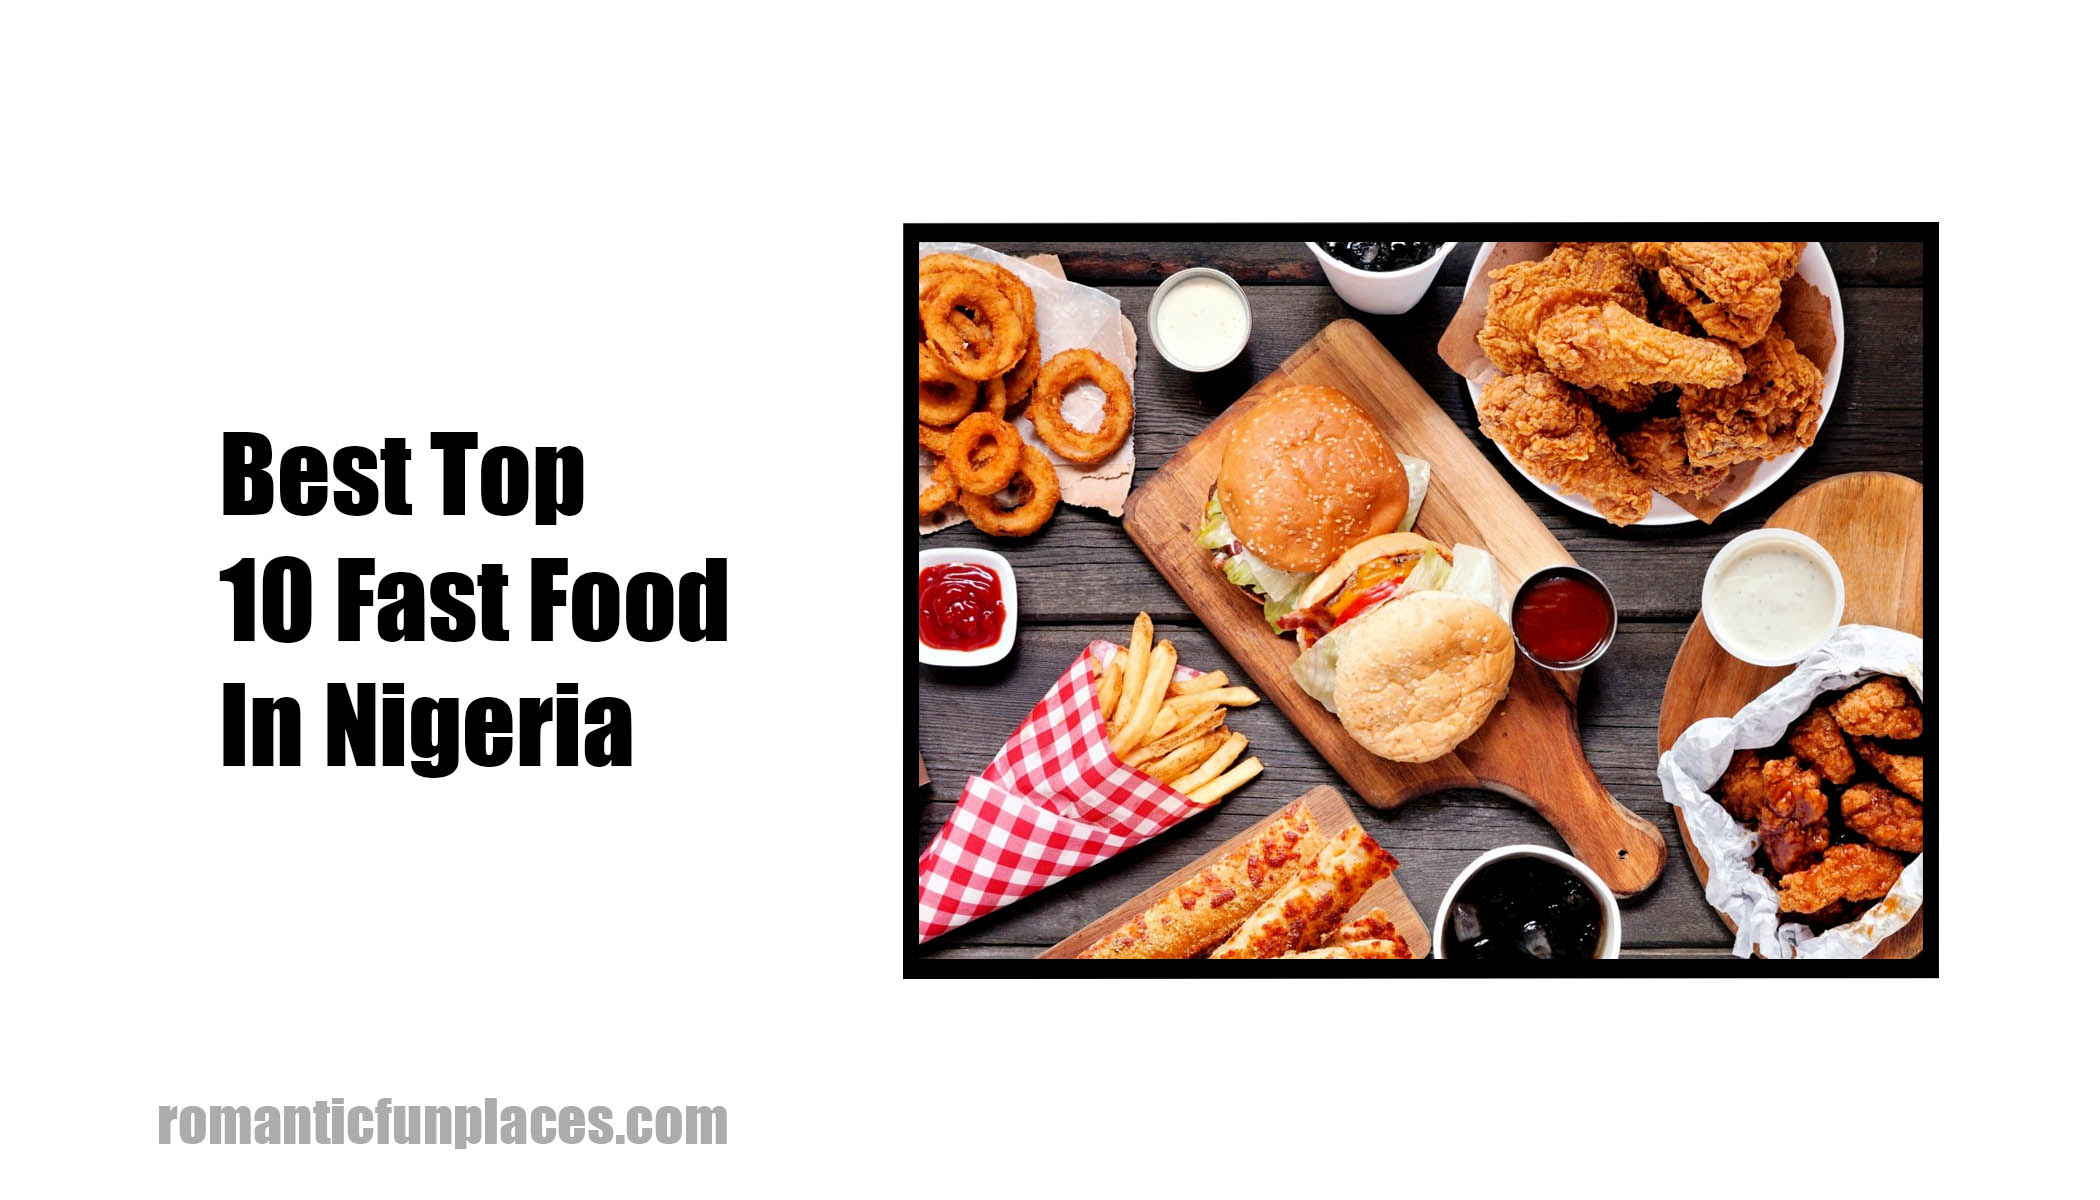 Best Top 10 Fast Food In Nigeria